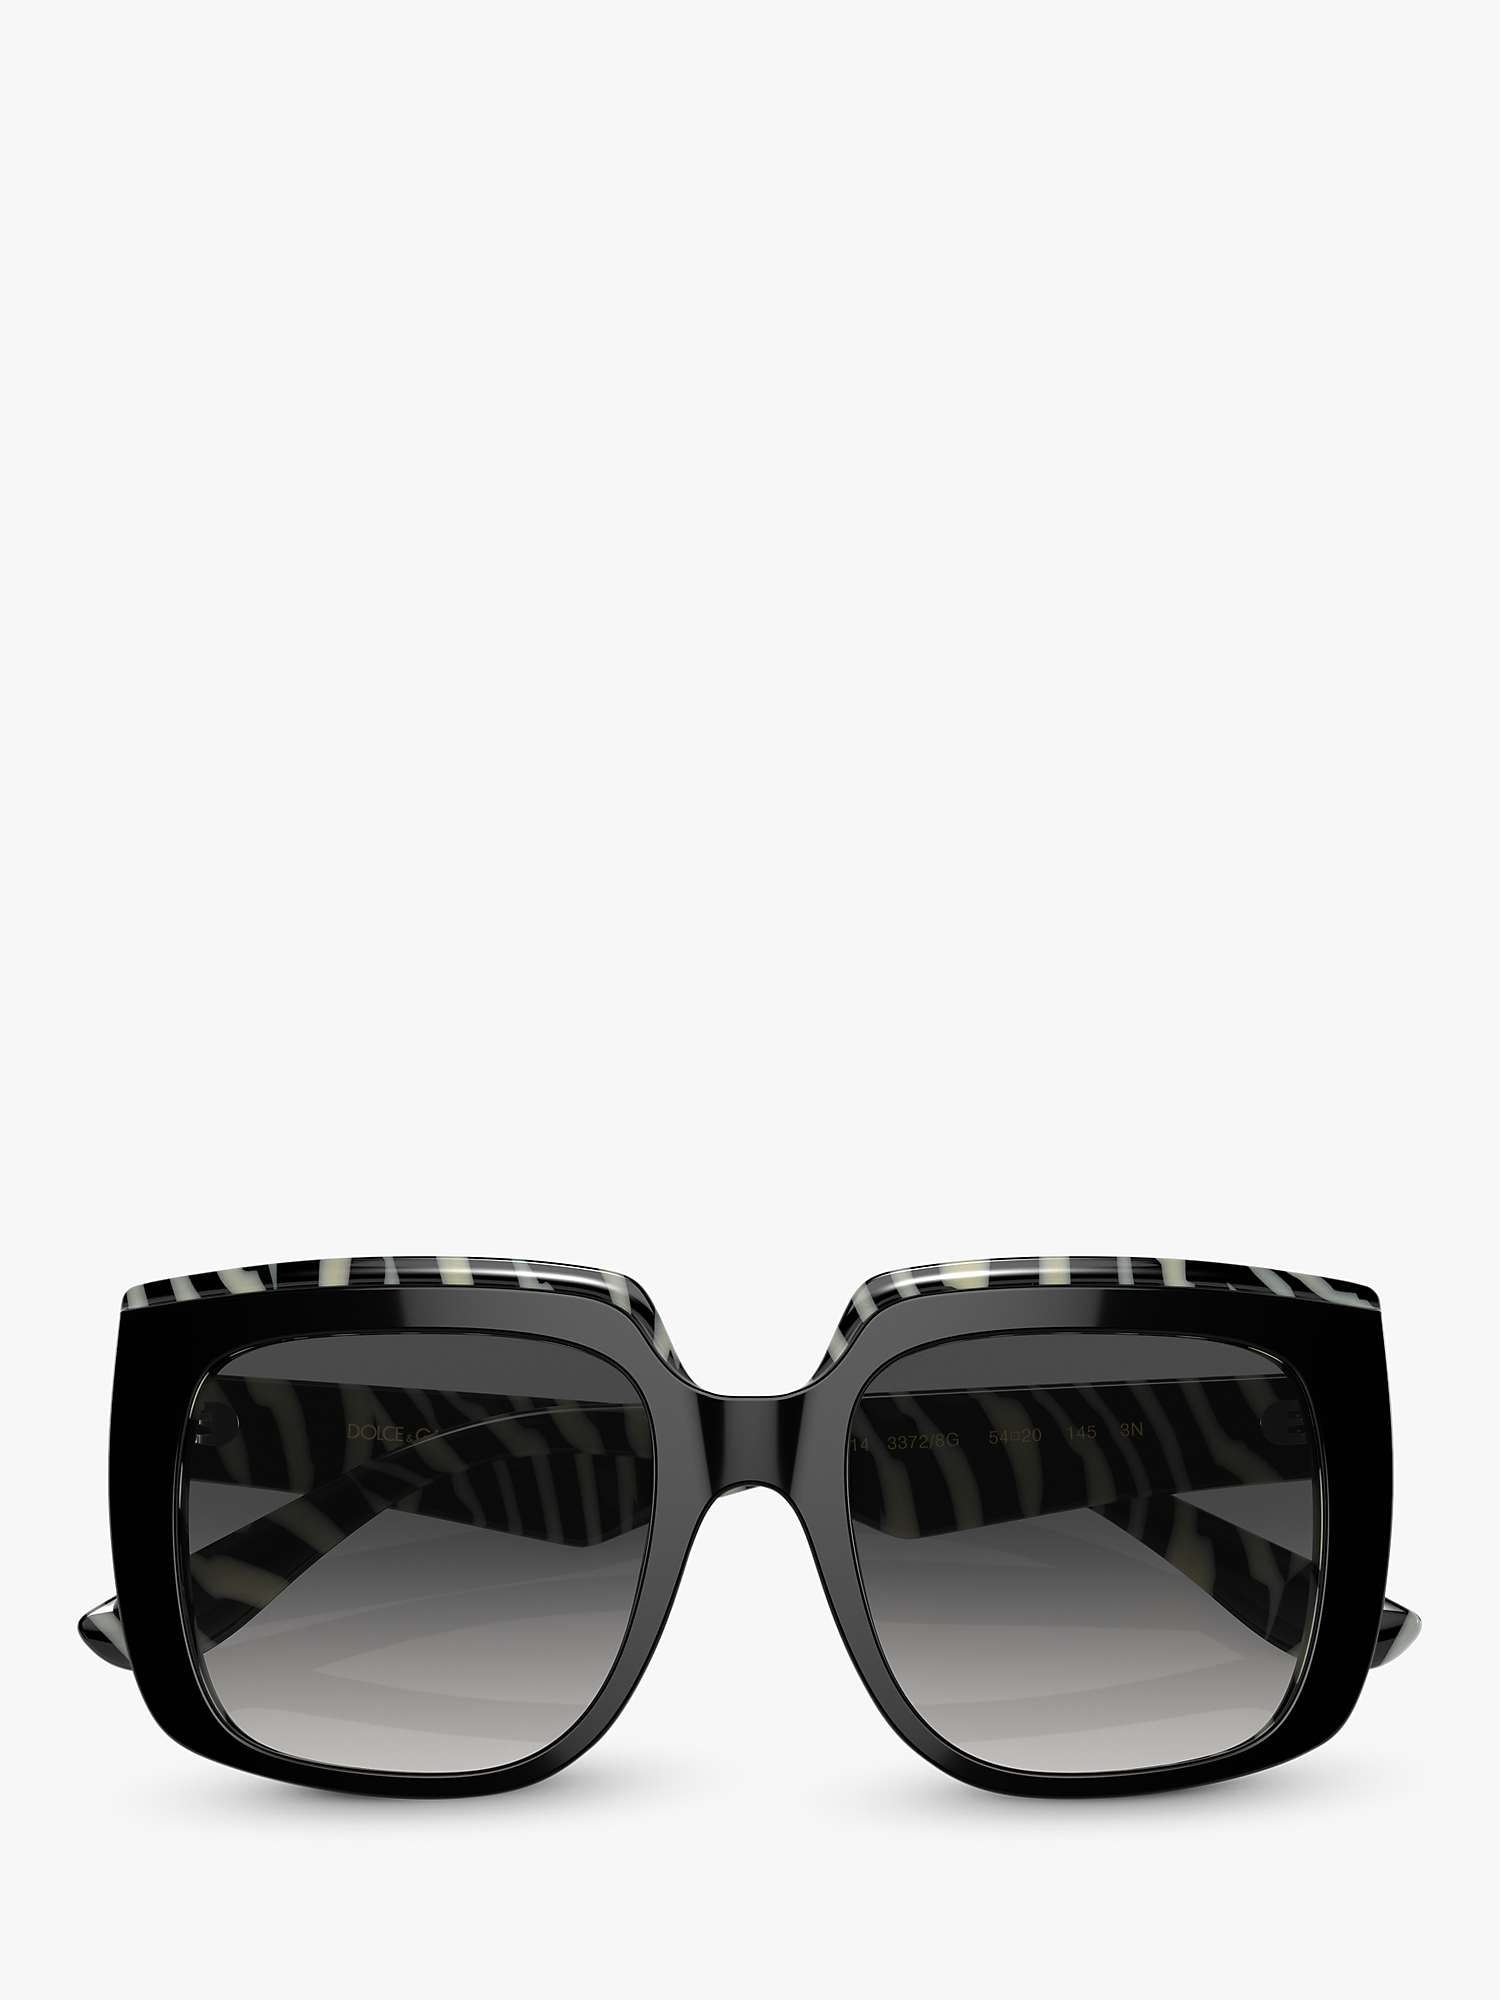 Buy Dolce & Gabbana DG4414 Women's Square Sunglasses, Black/Grey Gradient Online at johnlewis.com